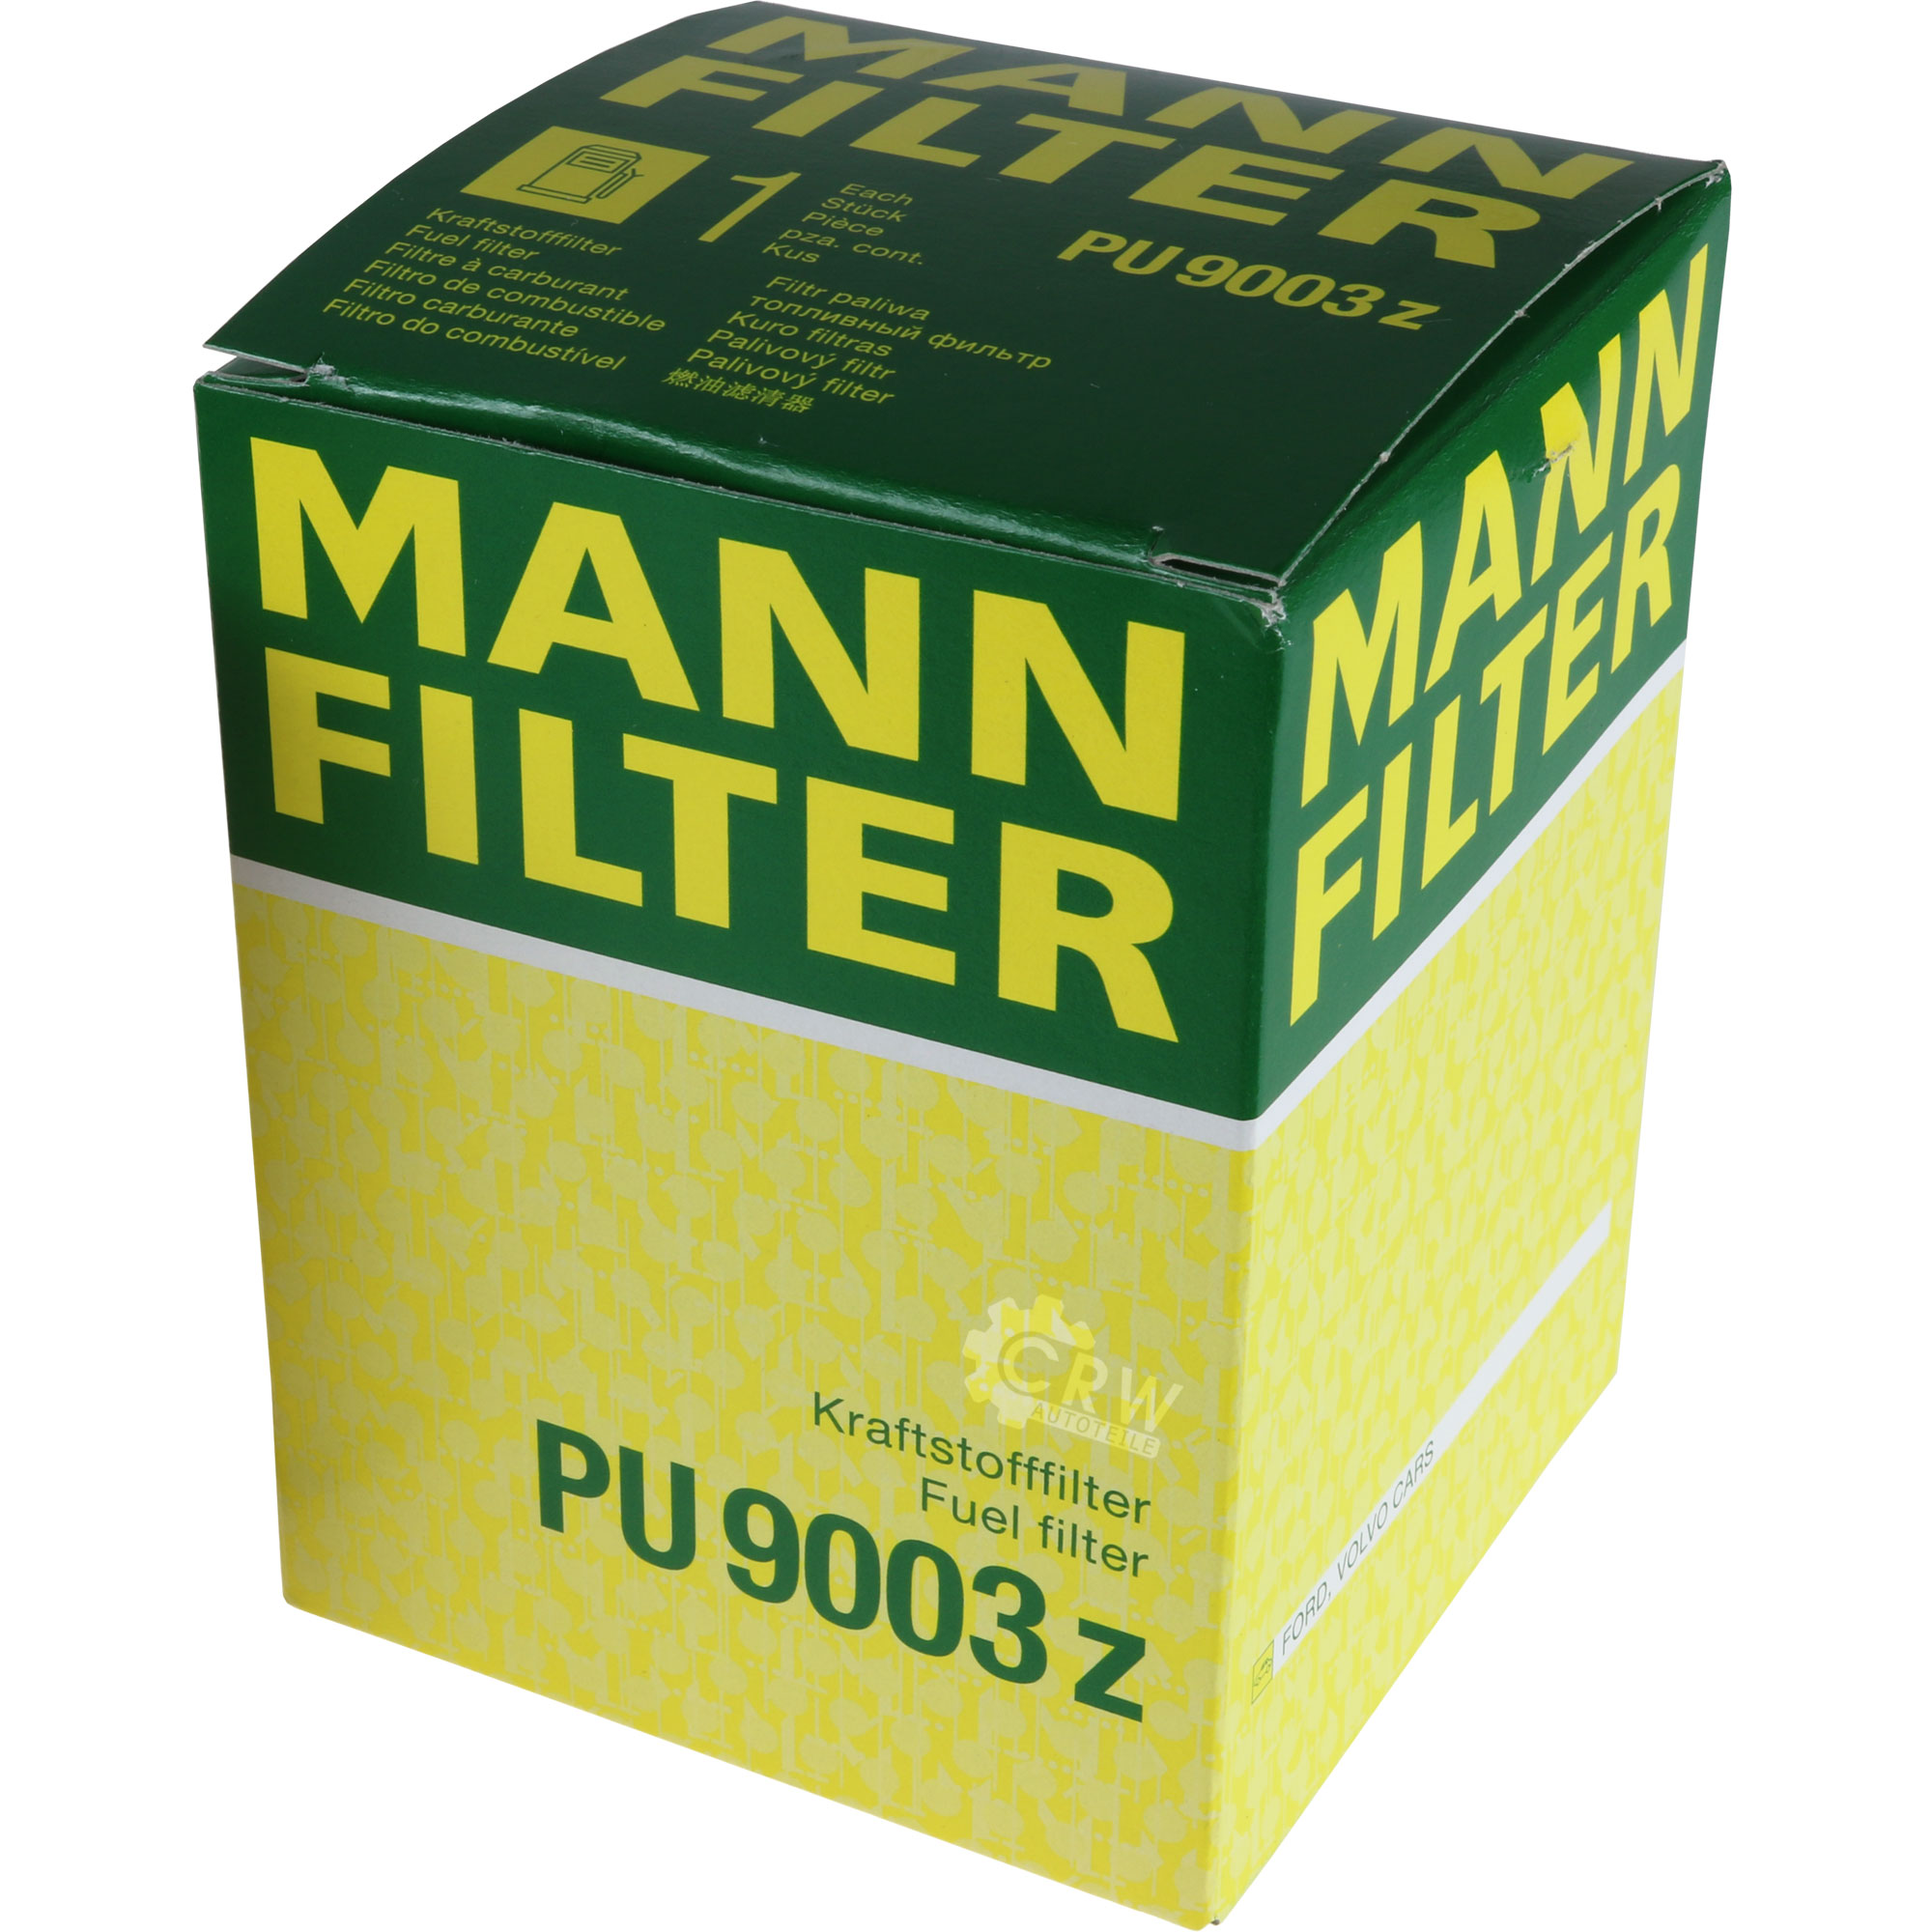 MANN-FILTER Kraftstofffilter PU 9003 z Fuel Filter